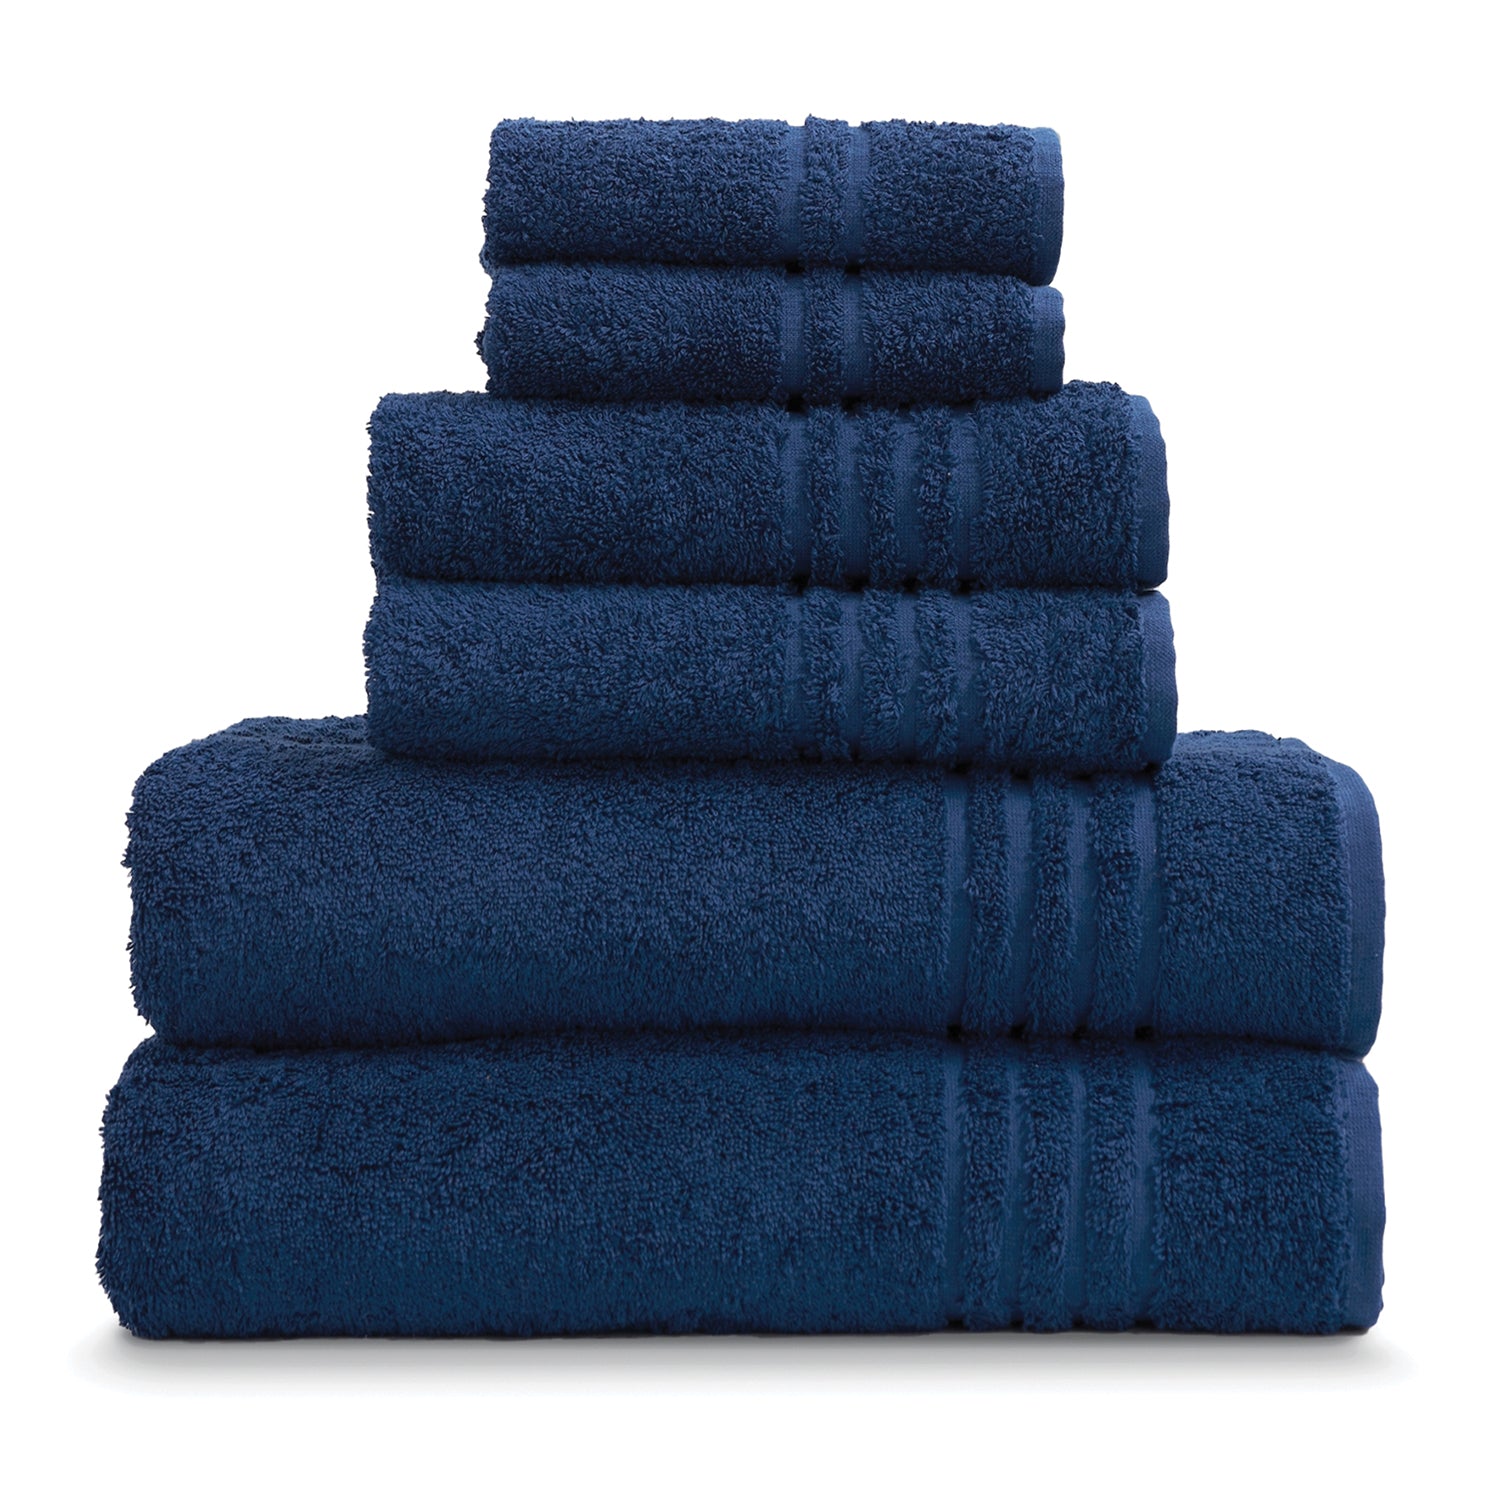 Laural Home 6-Piece Spa Bath Towel Set - Navy